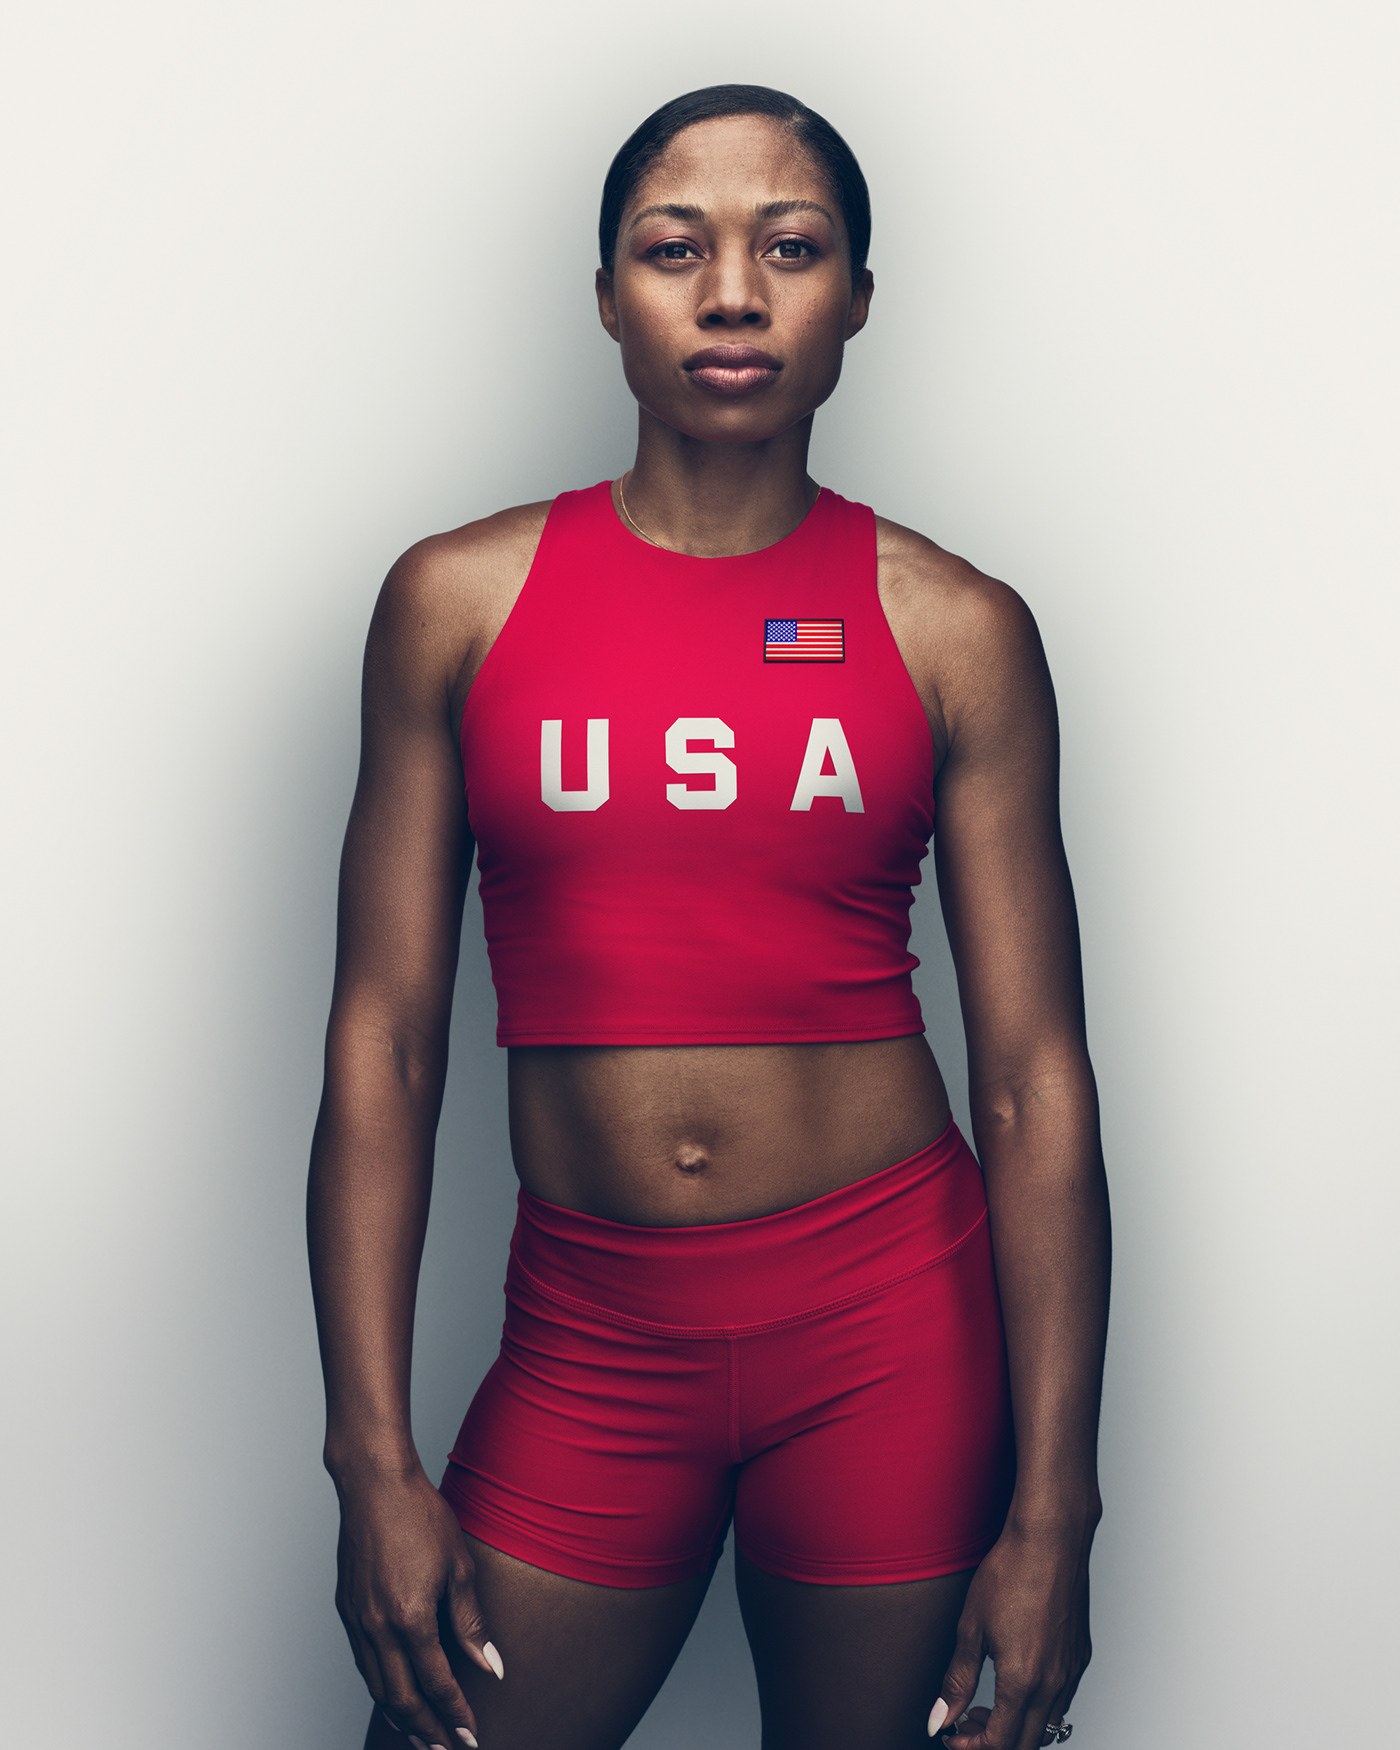 Advertising  athlete fitness Olympians Olympics portrait portraits sport sports